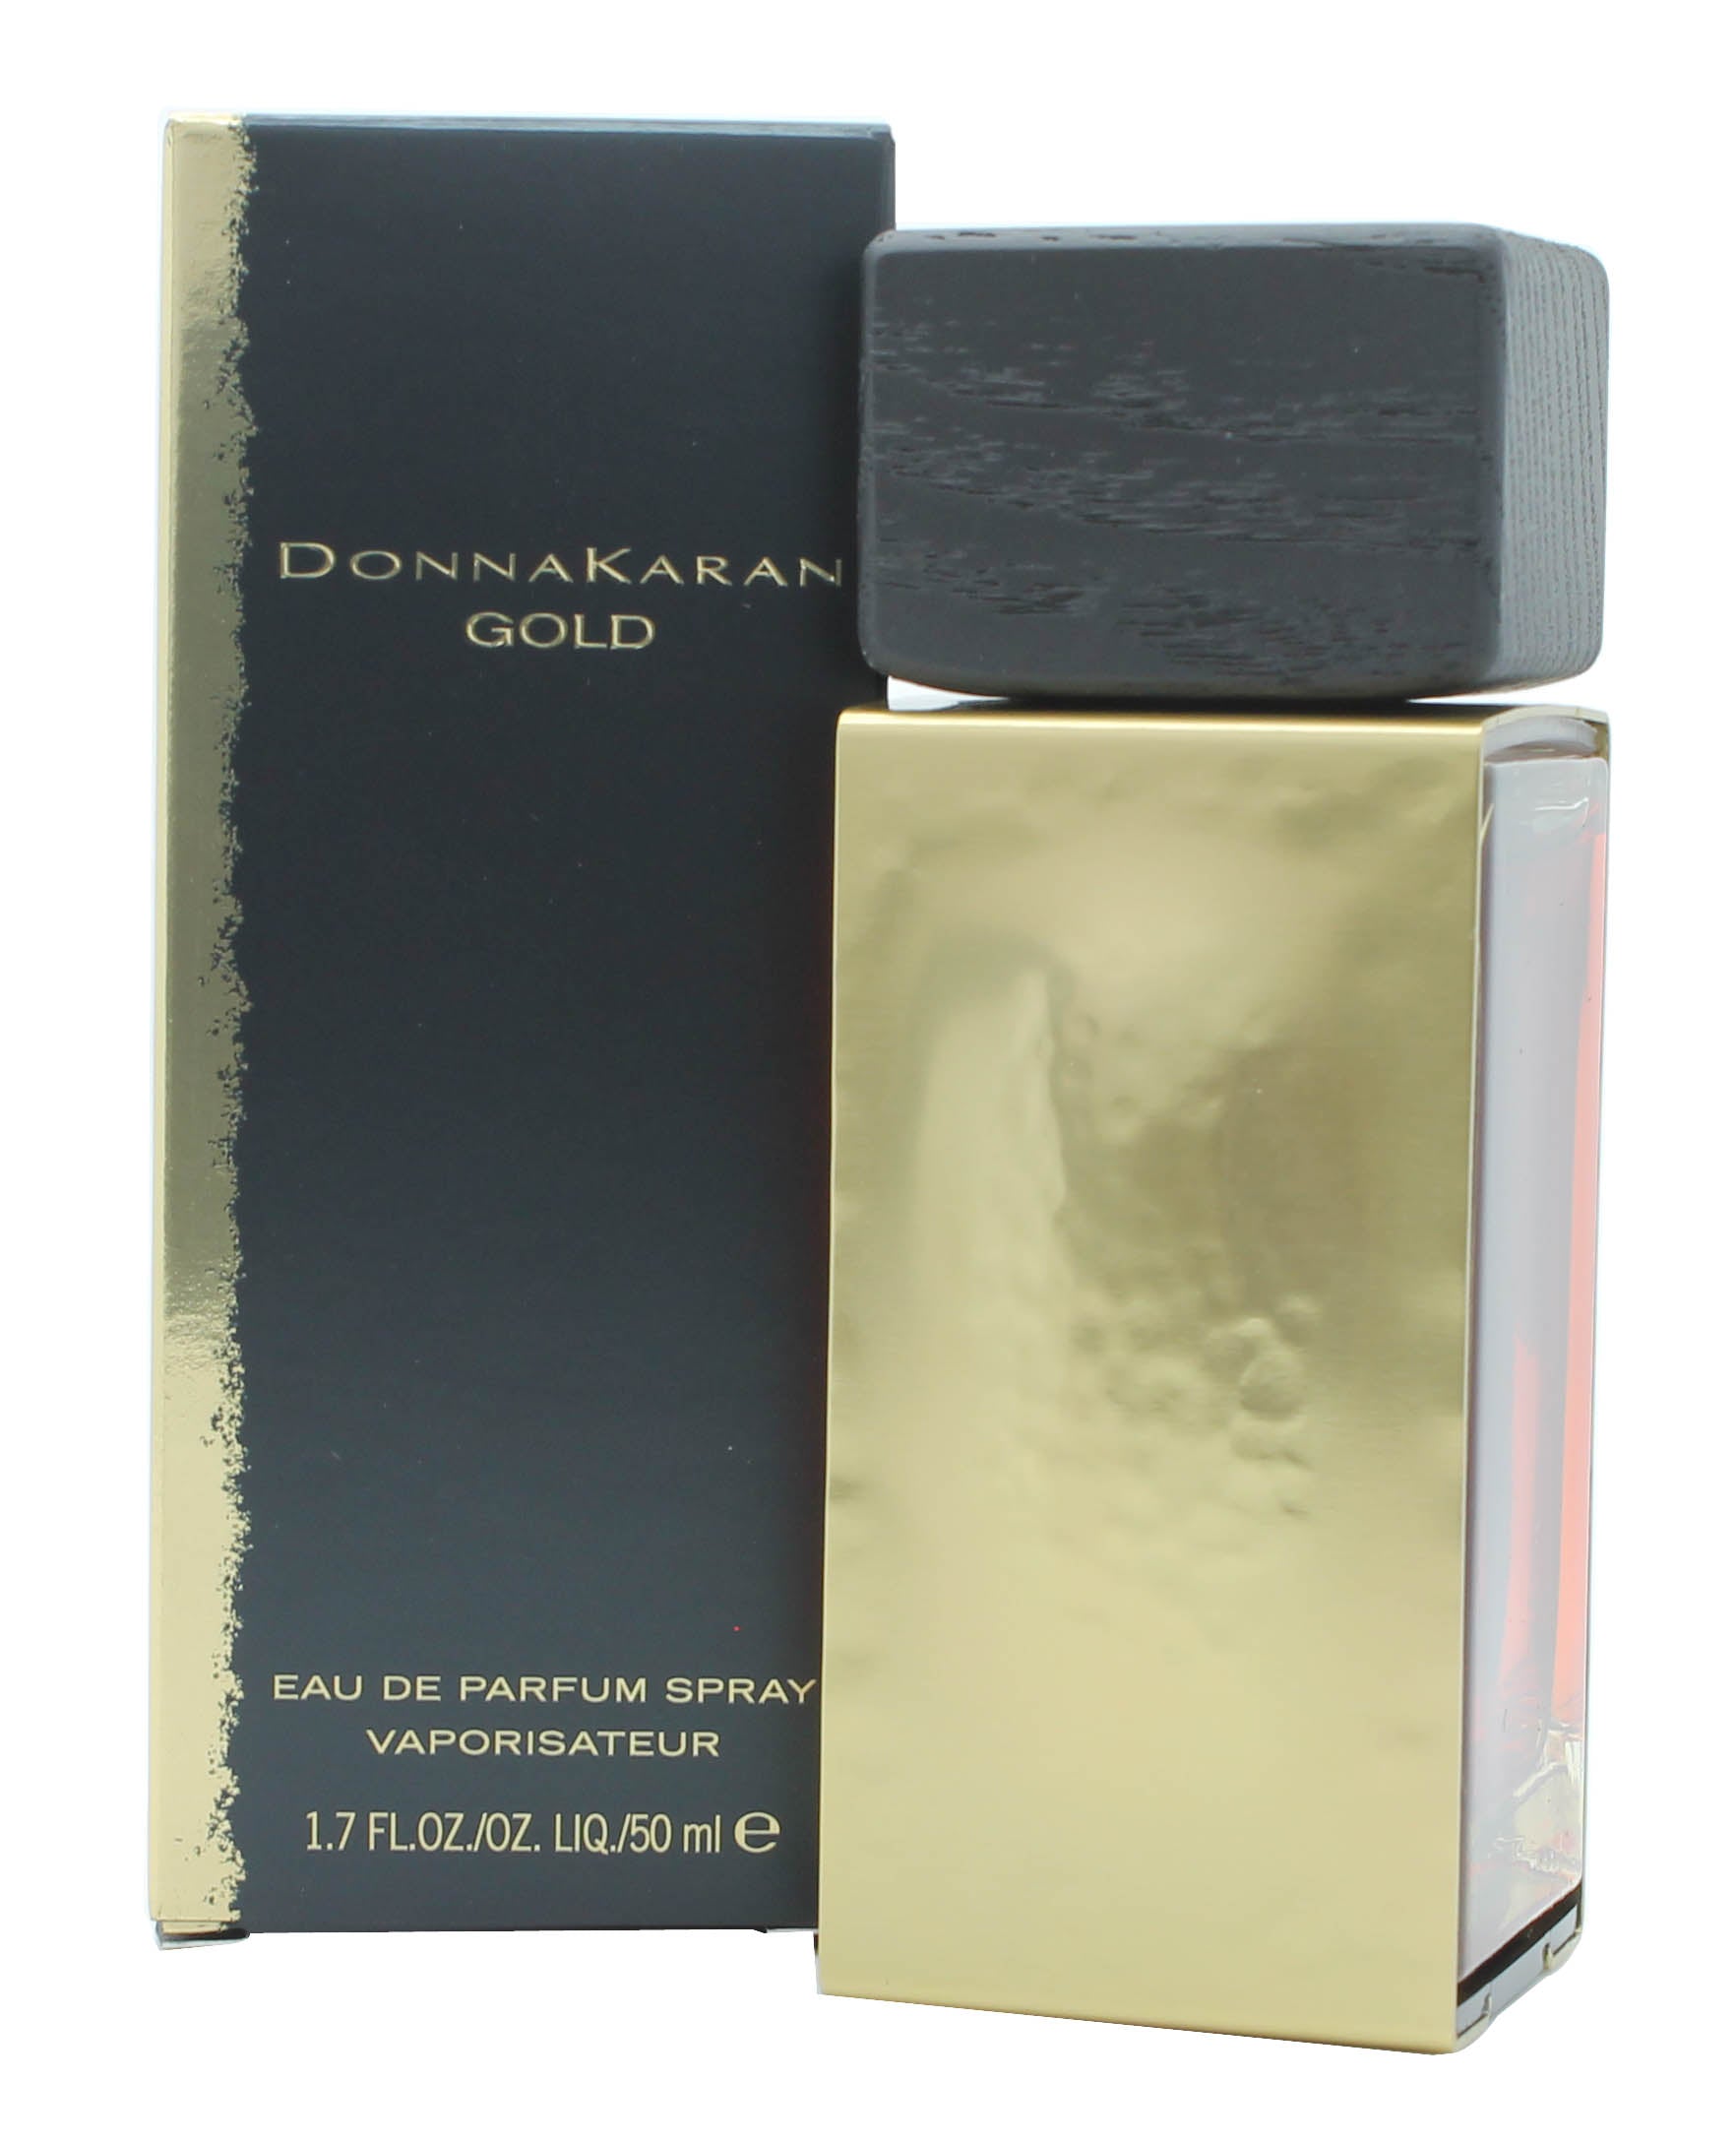 View DKNY Gold Eau de Parfum 50ml Spray information